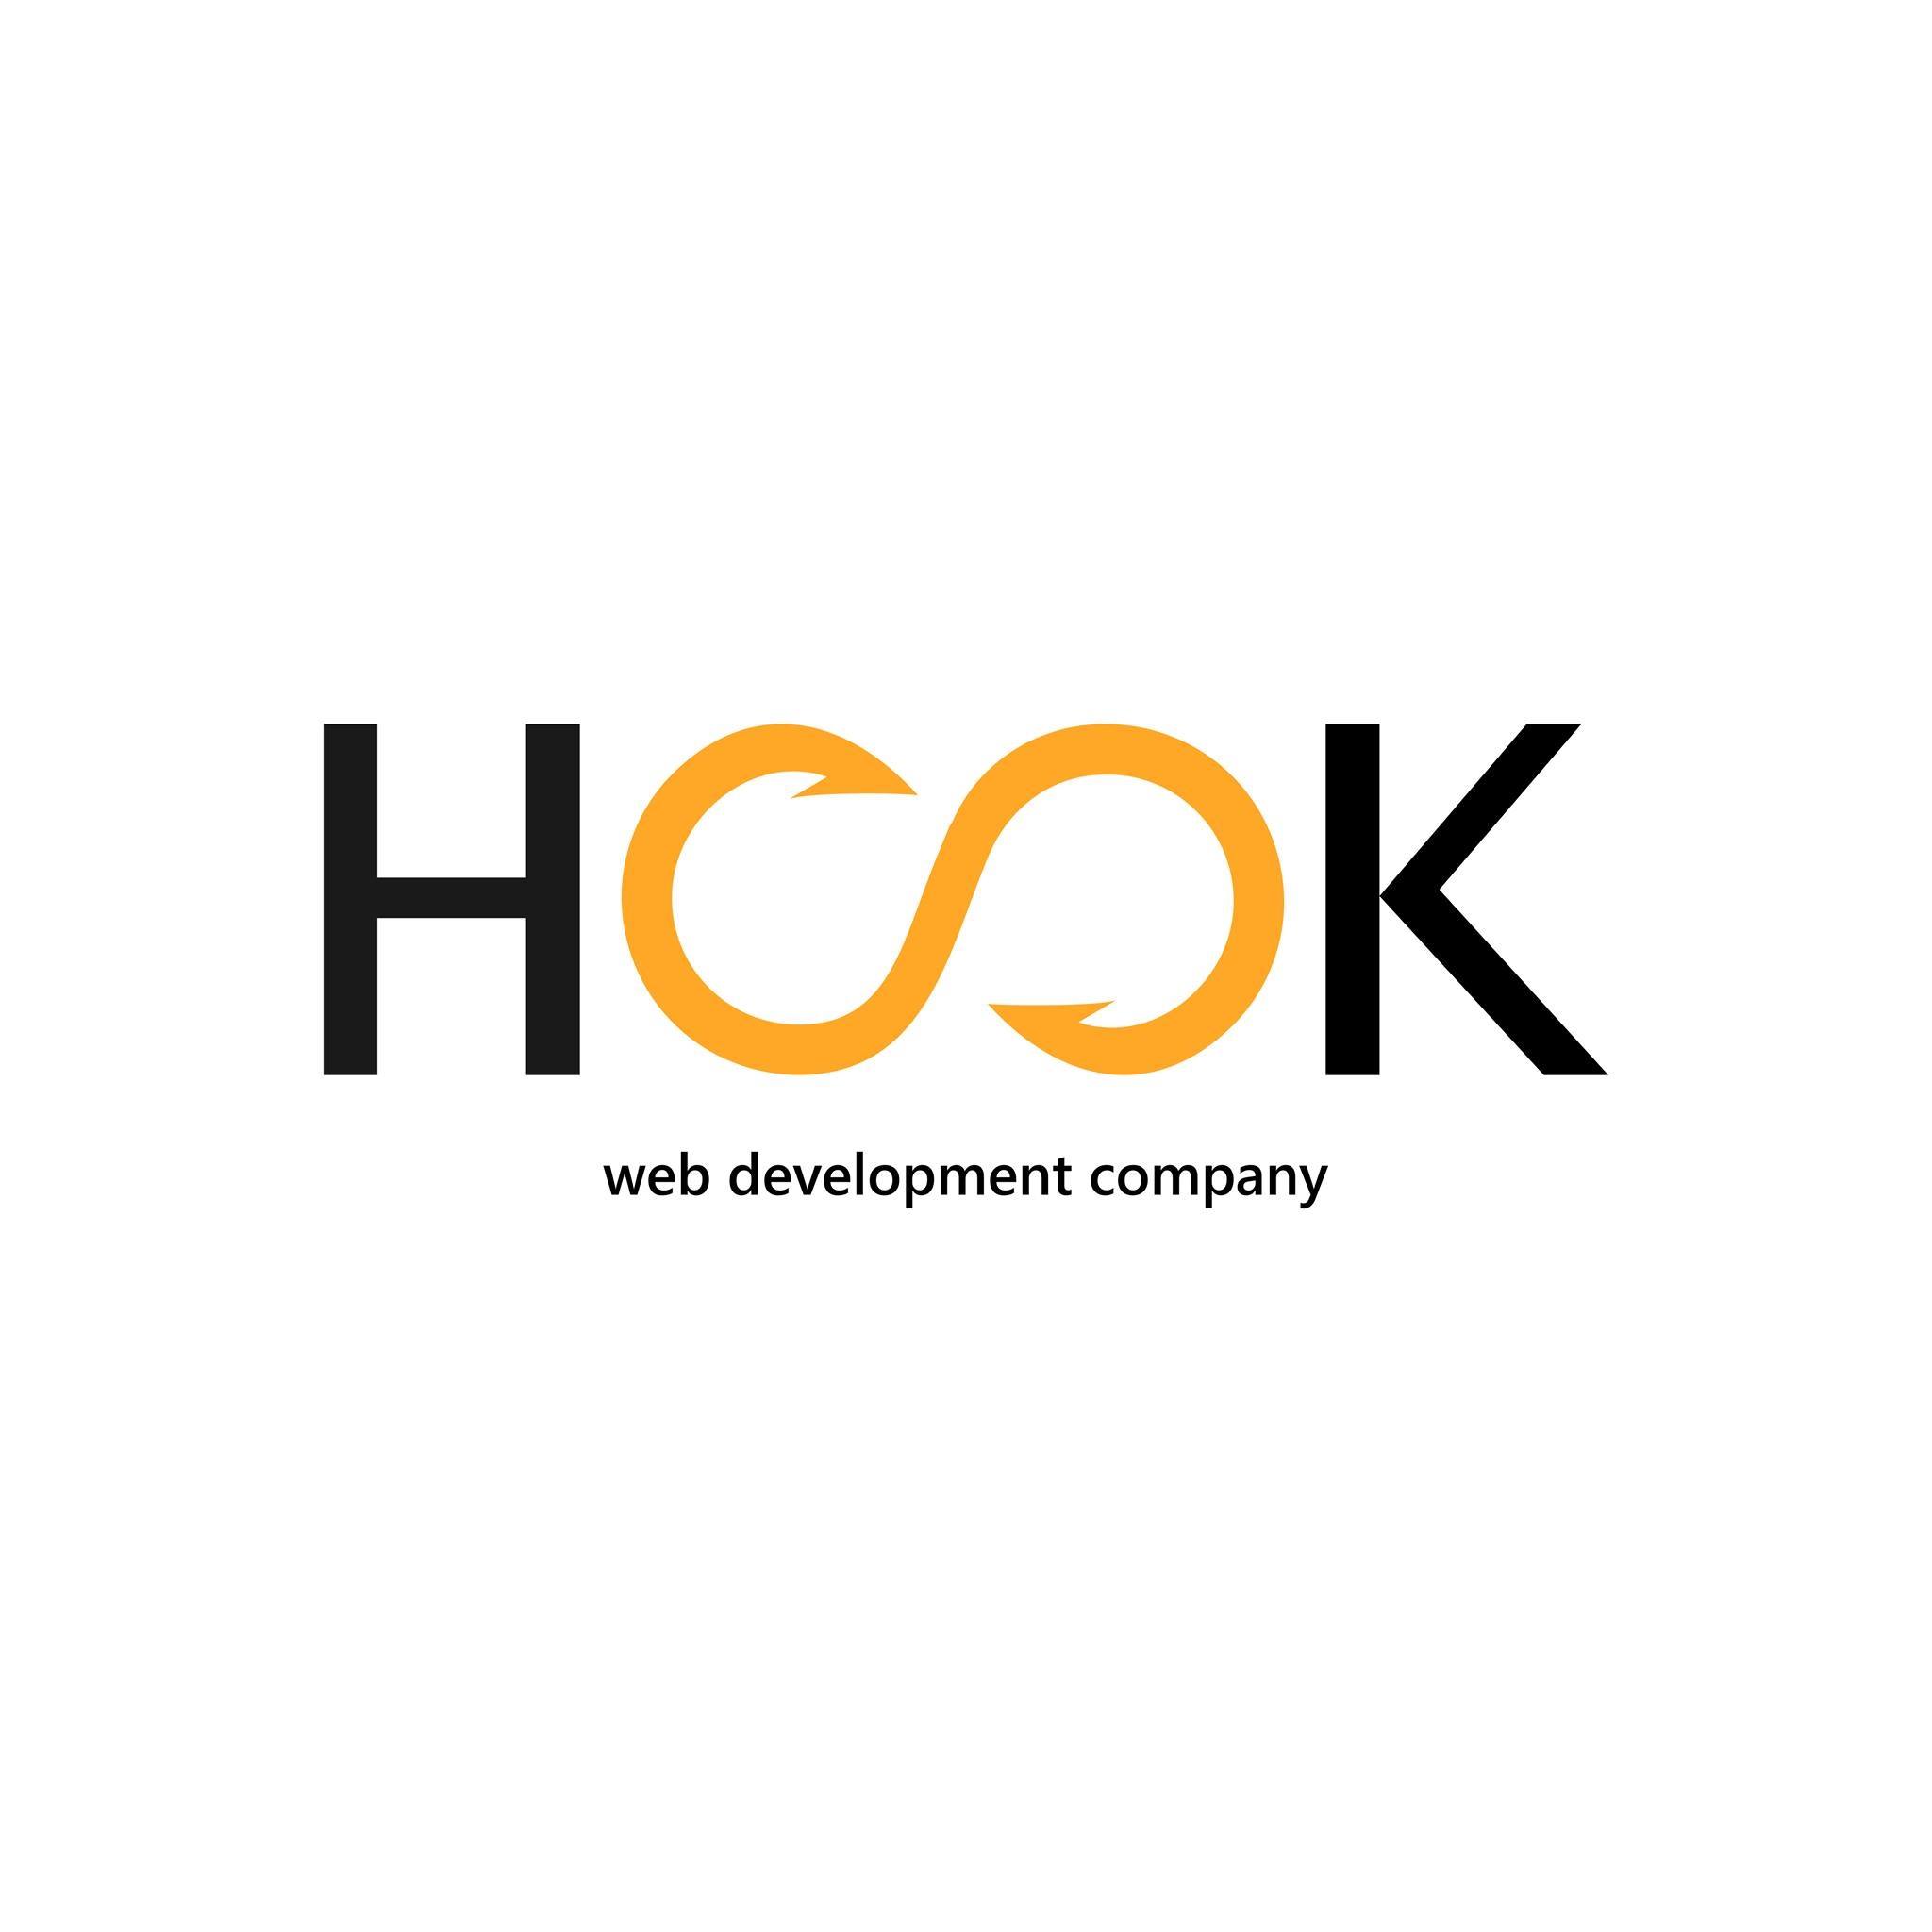 HOOK LLC Armenia